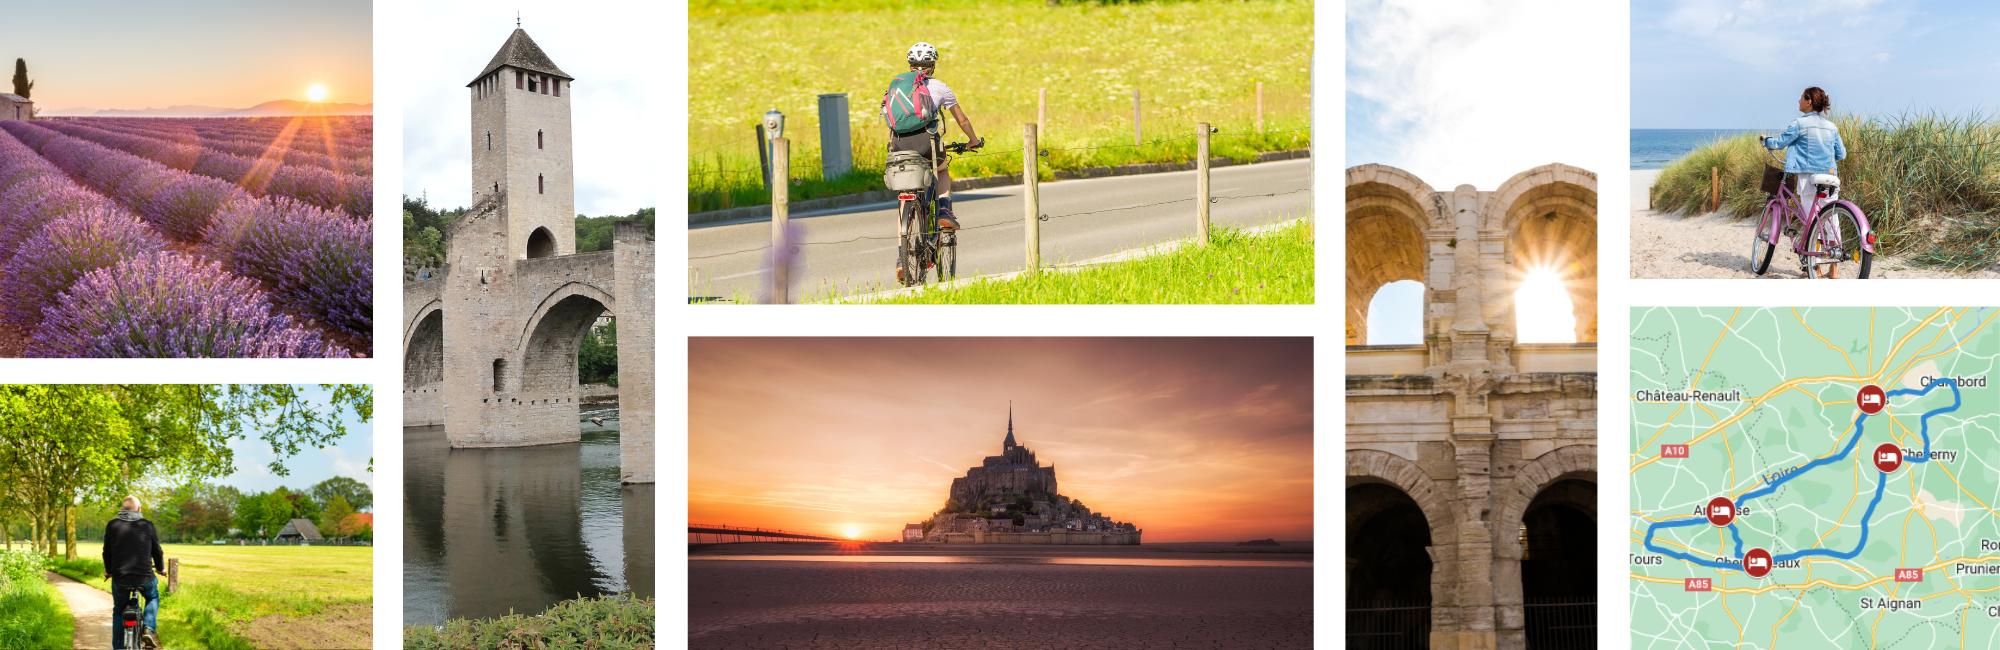 Circuit vélo en boucle en France